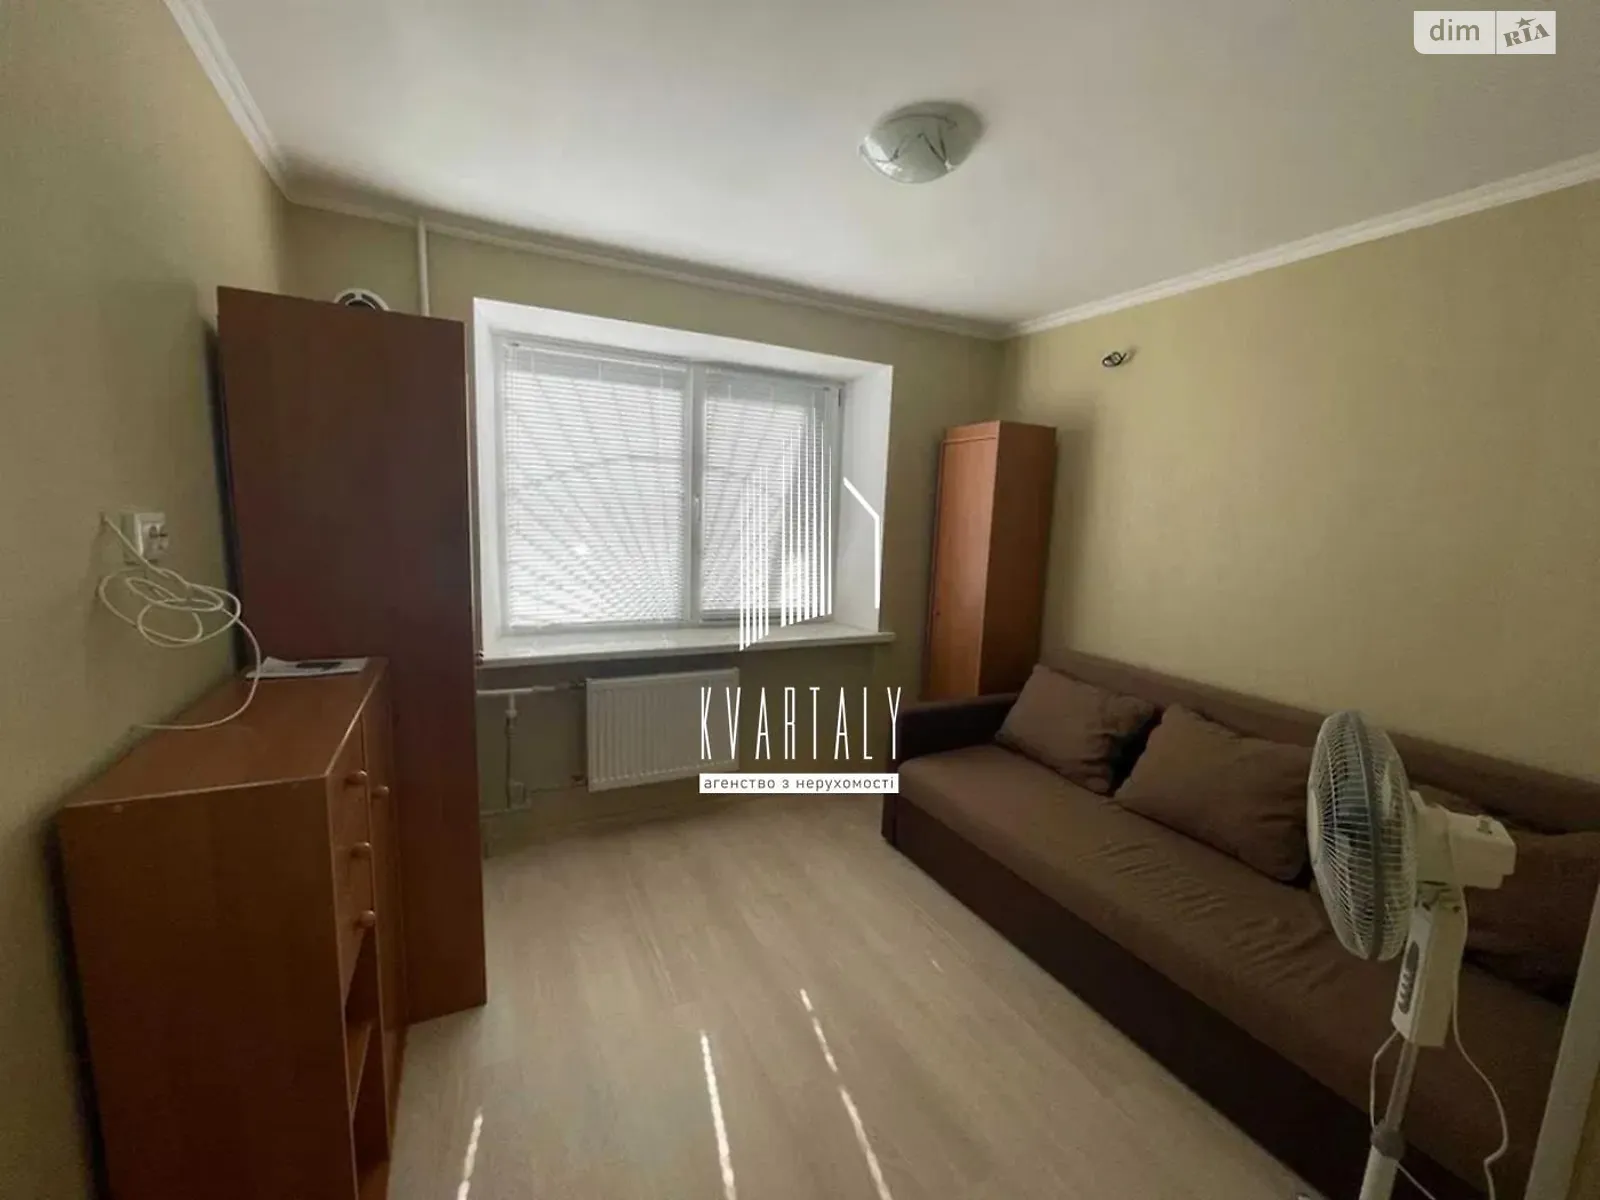 Продается комната 14 кв. м в Киеве, цена: 18000 $ - фото 1